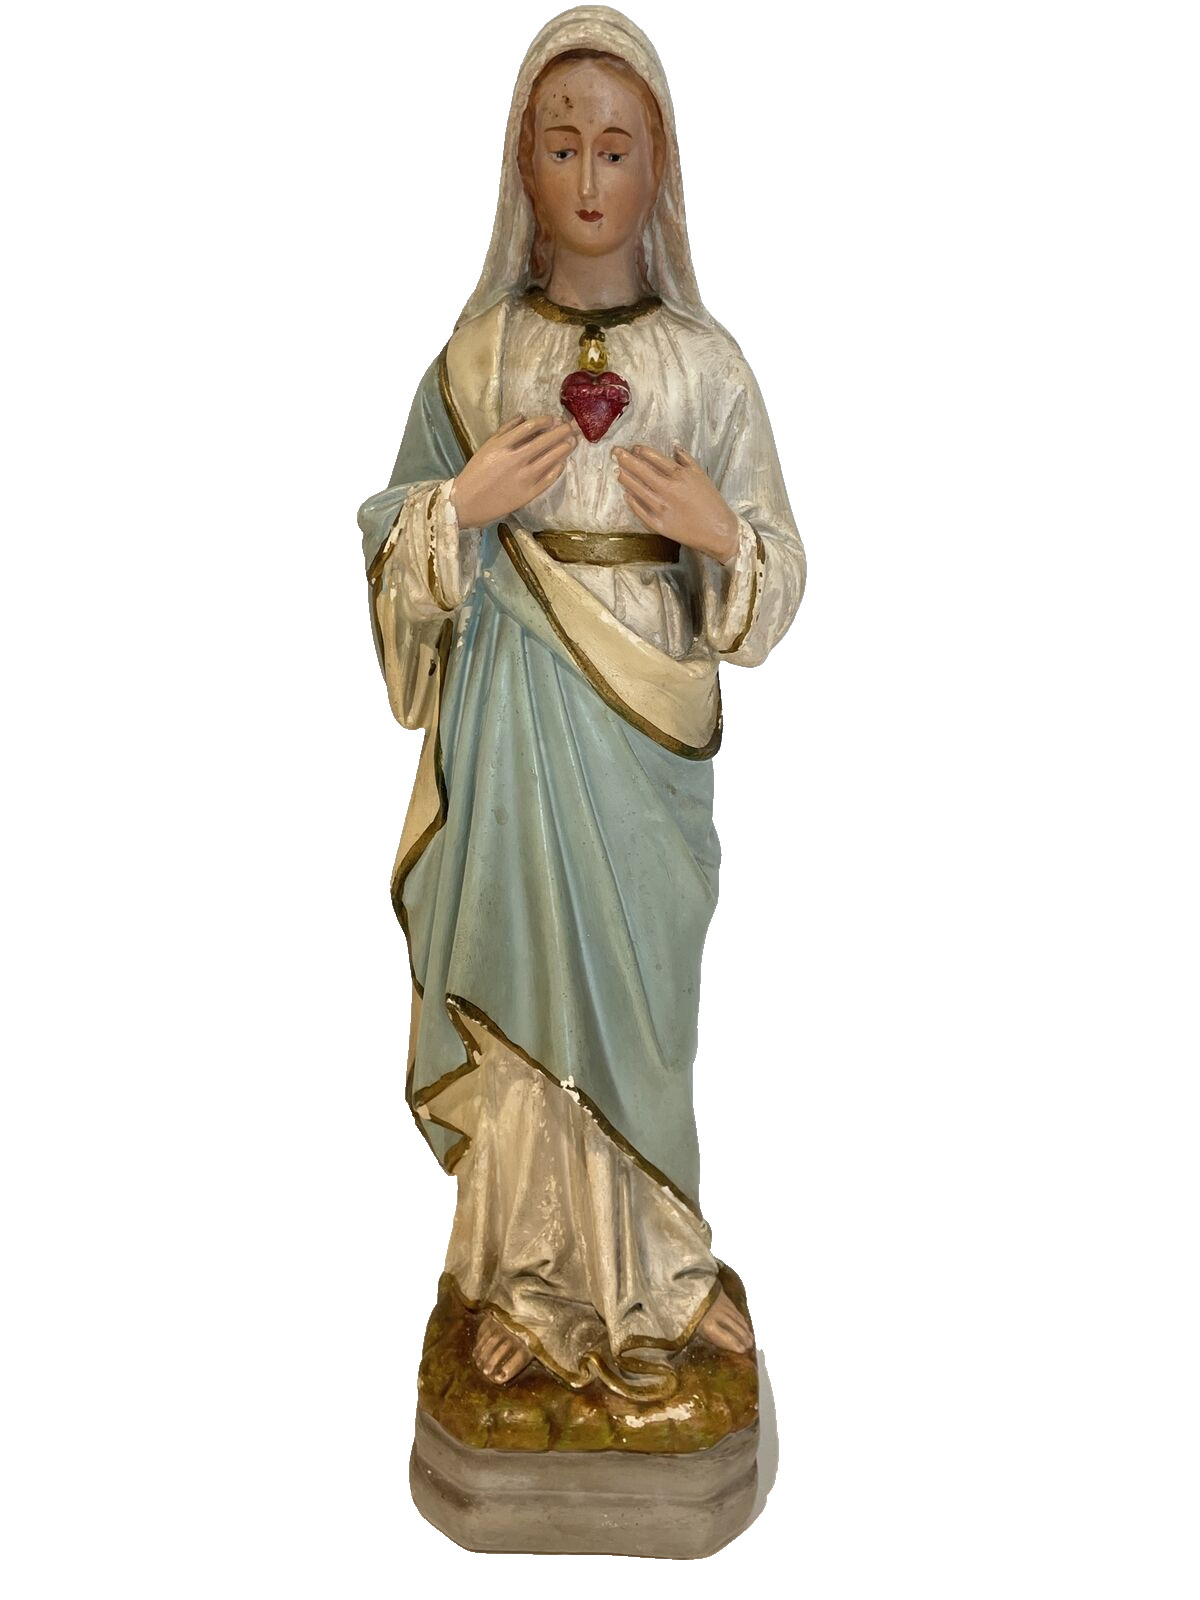 ANTIQUE PLASTER CATHOLIC STATUE - VIRGIN MARY FLAMING SACRED HEART -  18